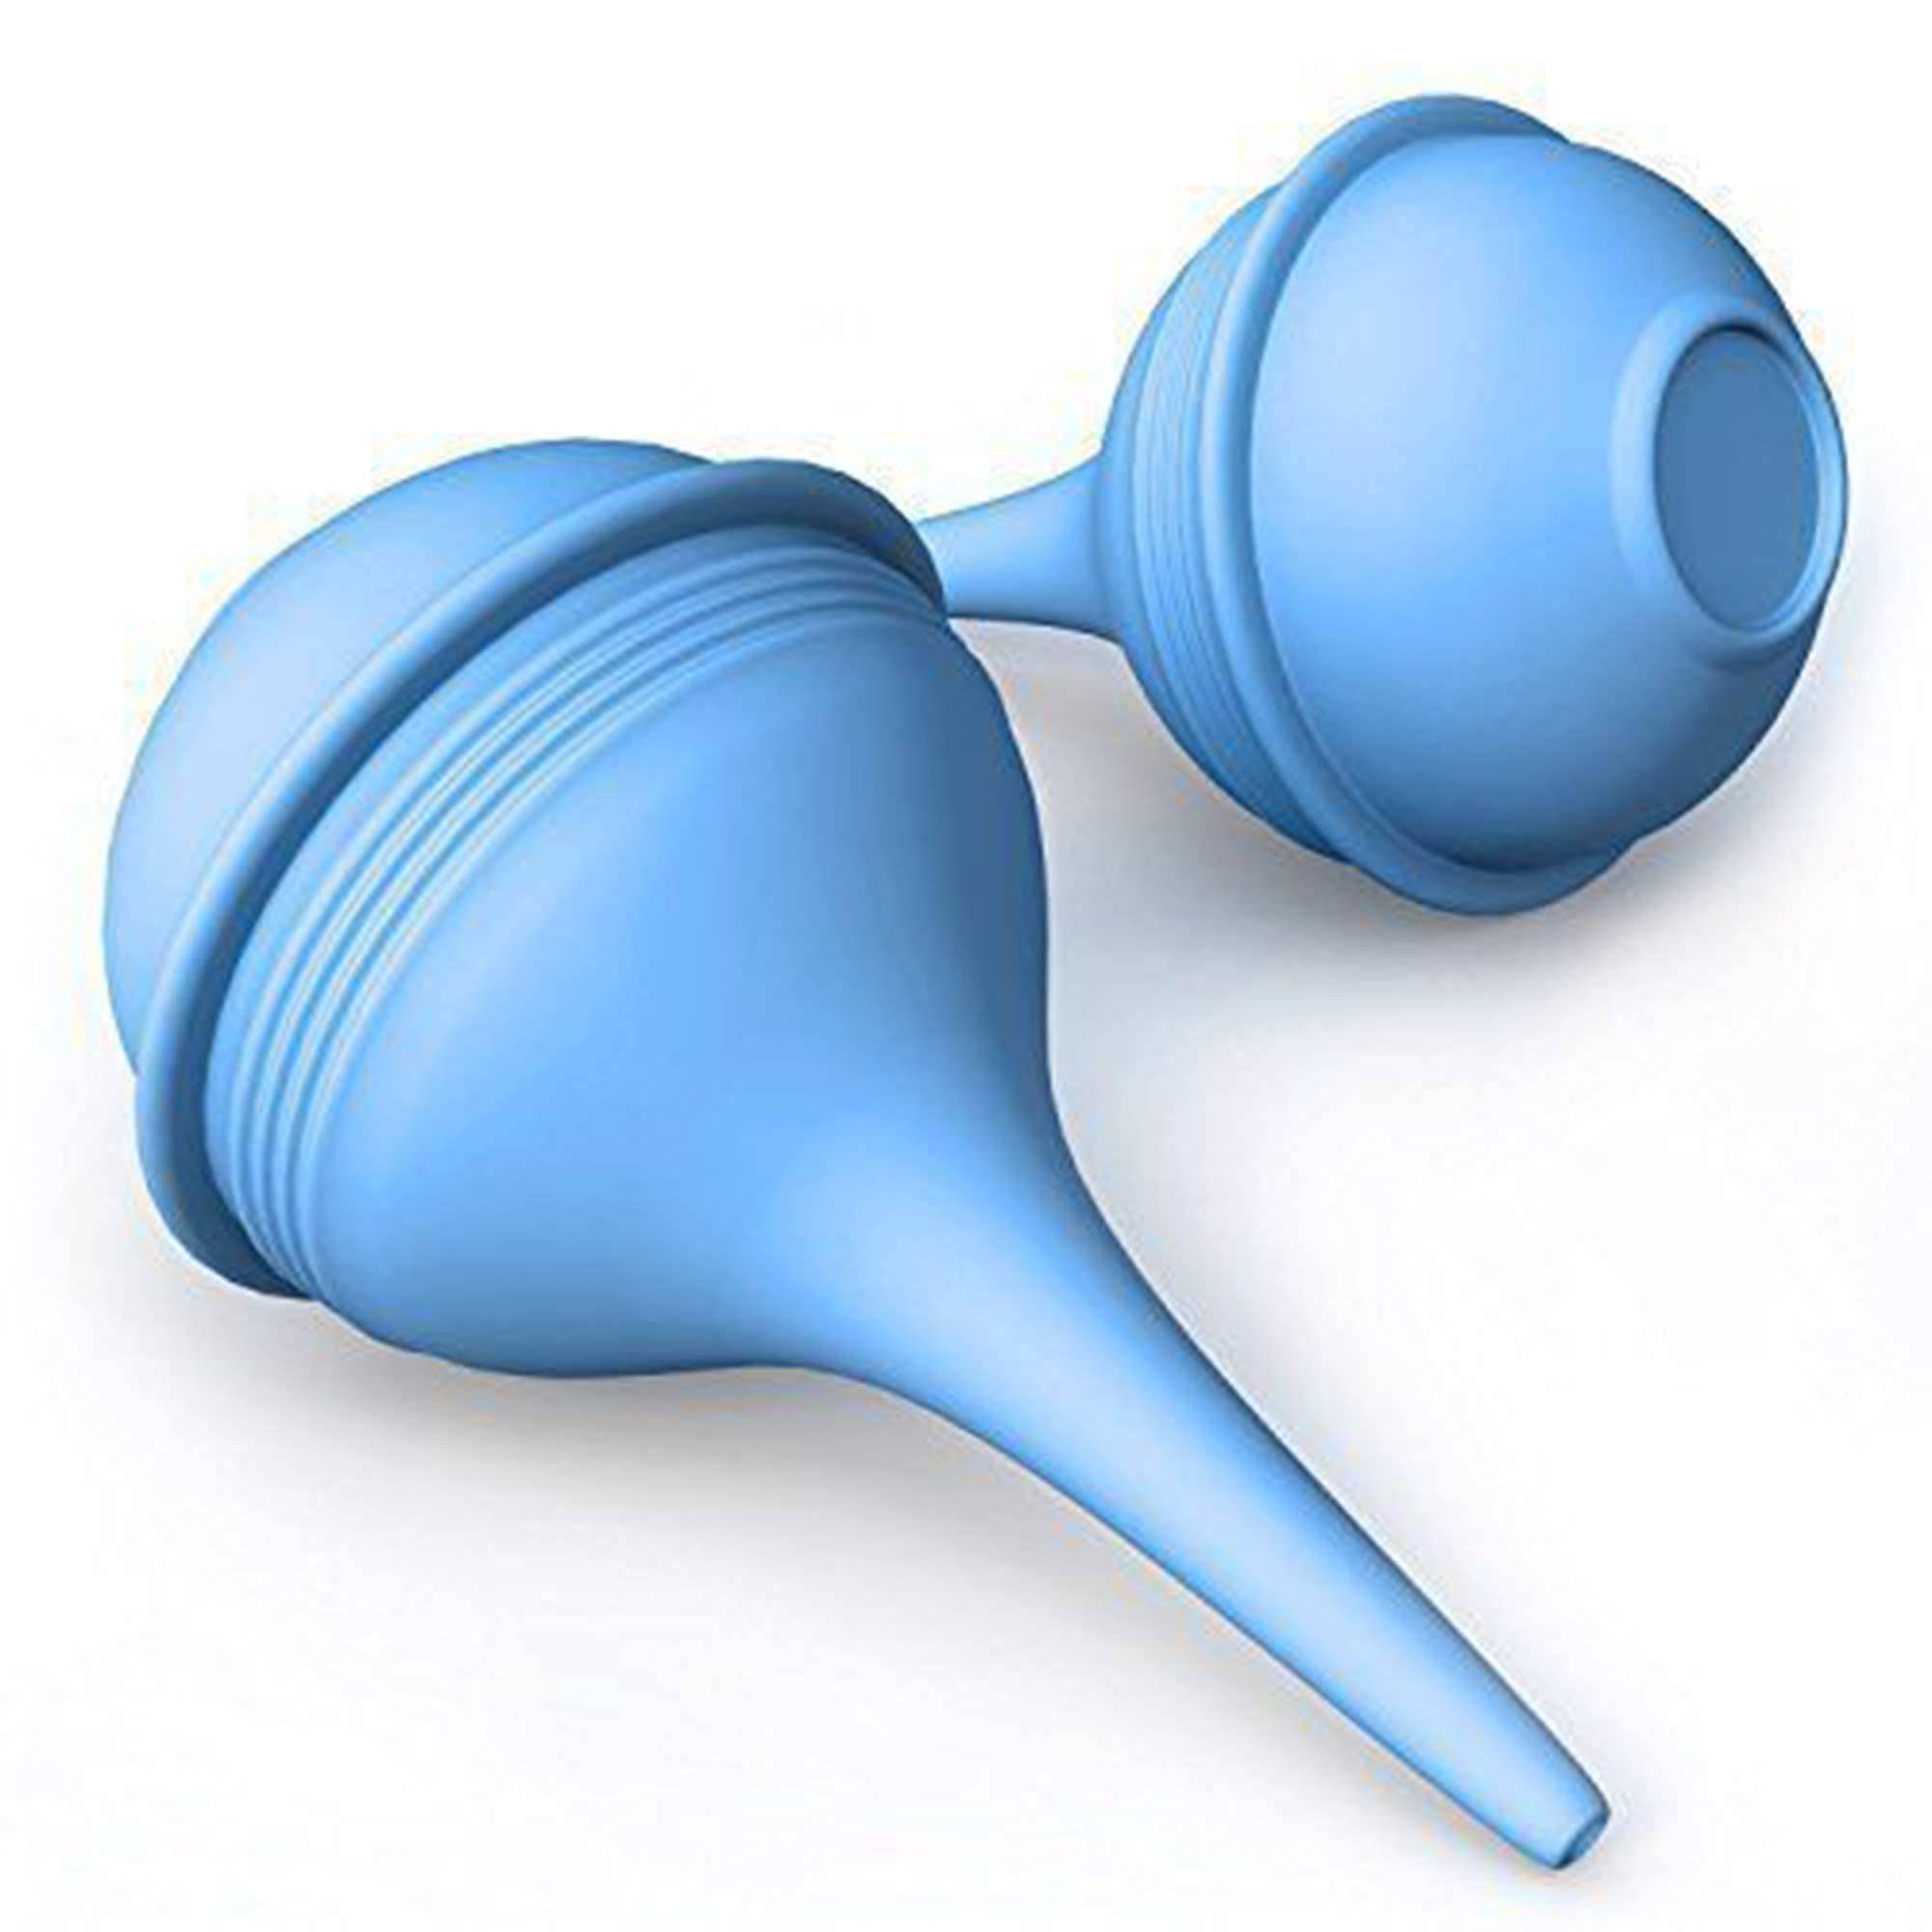 rubber bulb syringe for ear wax